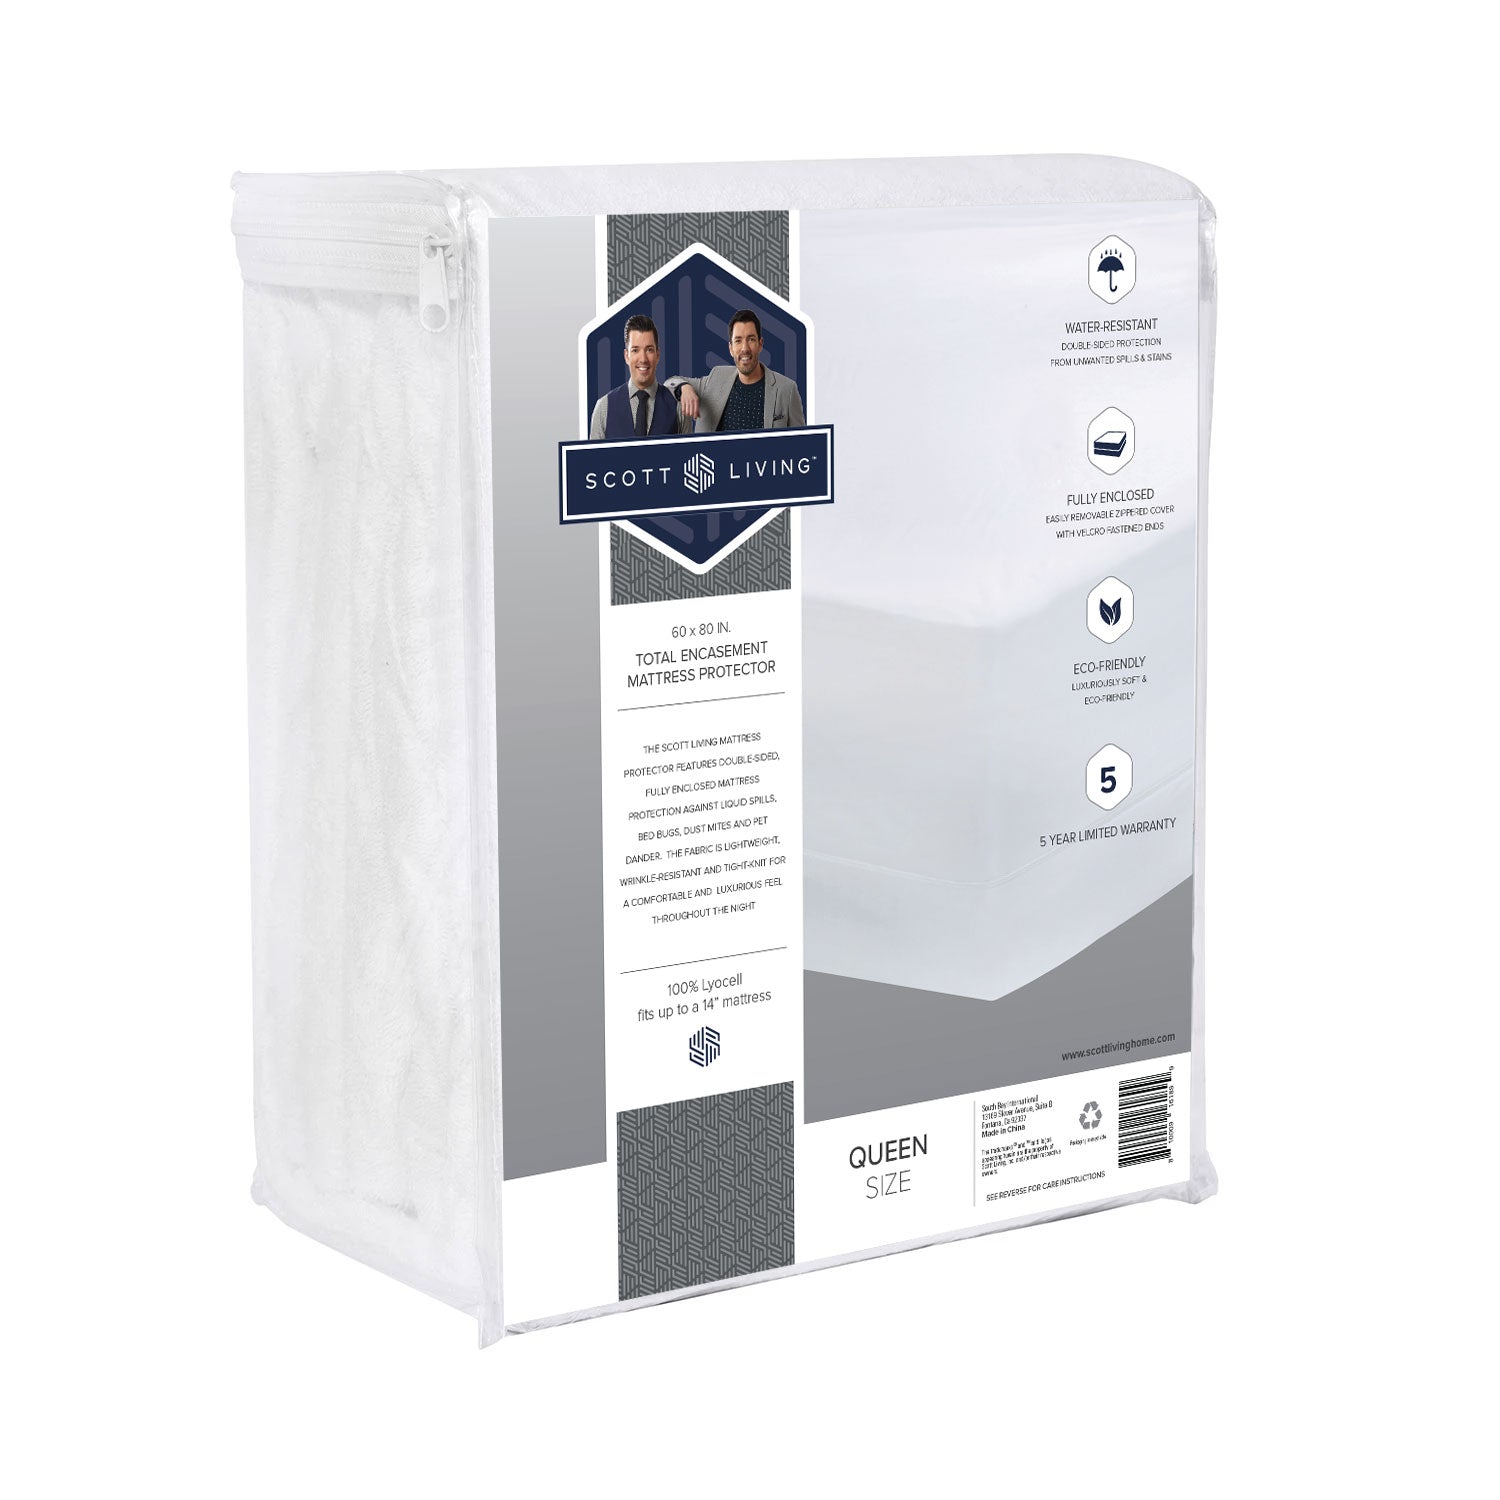 Scott Living Home - Full Encasement Premium Tencel Mattress Protector -100% Waterproof and Hypoallergenic - BlissfulNights.com